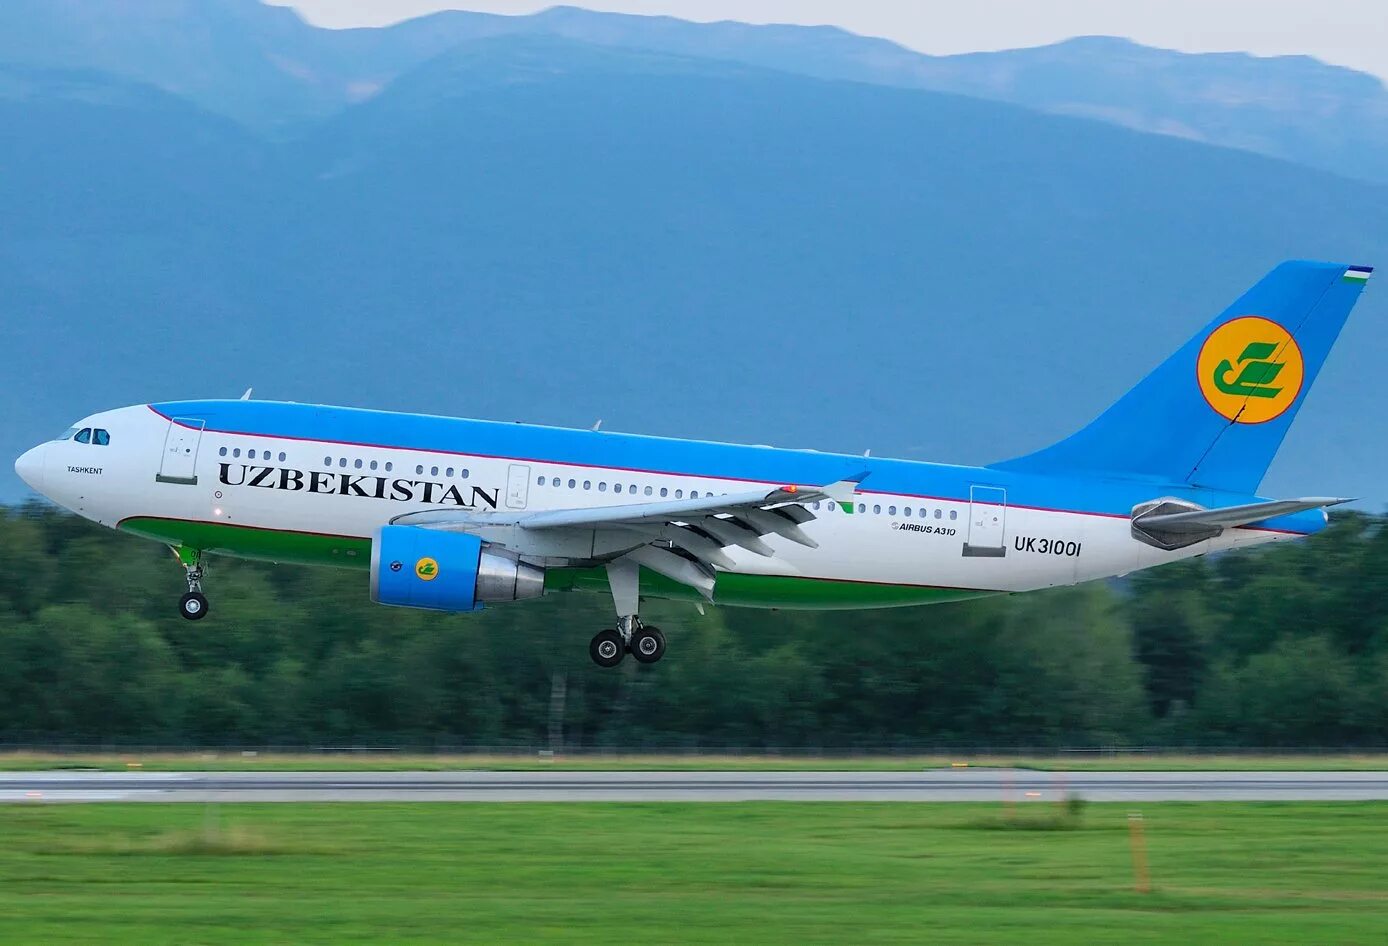 Самолёт авиакомпании Uzbekistan Airways. Самолет Узбекистан хаво йуллари. Airbus a321 Neo Uzbekistan Airways. Airbus a320 Uzbekistan Airways.